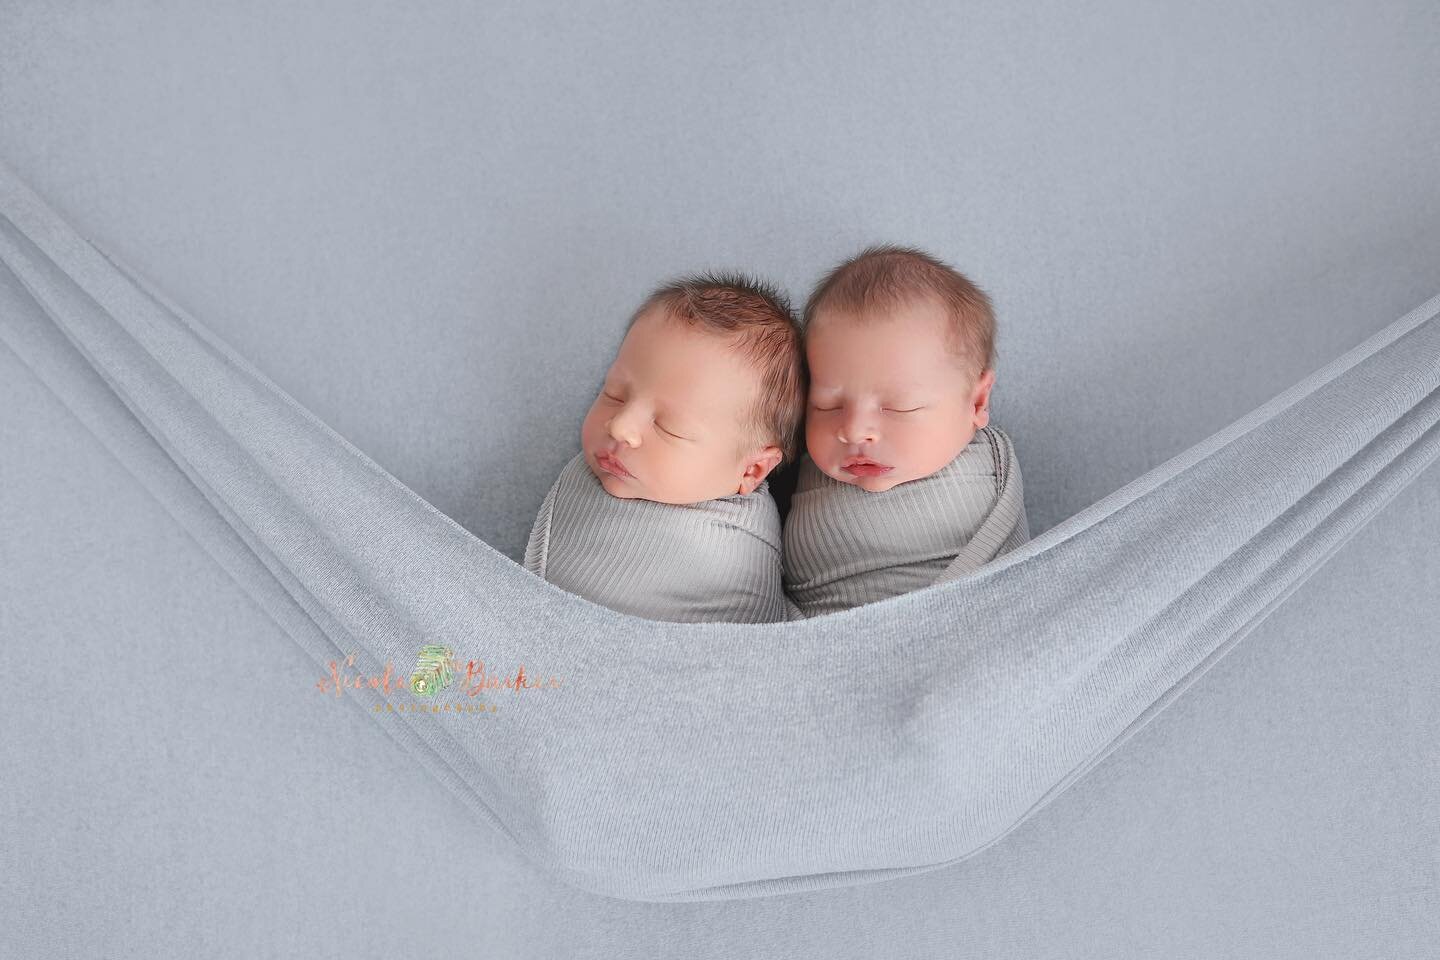 Brothers 💙💙
.
.
.
.
#twins #newbornphotography #newbornphotographer #twinphotographer #babies #sweet #brothers #washingtondc #nova #virginia #maryland #dc #dcnewbornphotographer #novanewbornphotographer #virginianewbornphotographer #fallschurchnewb